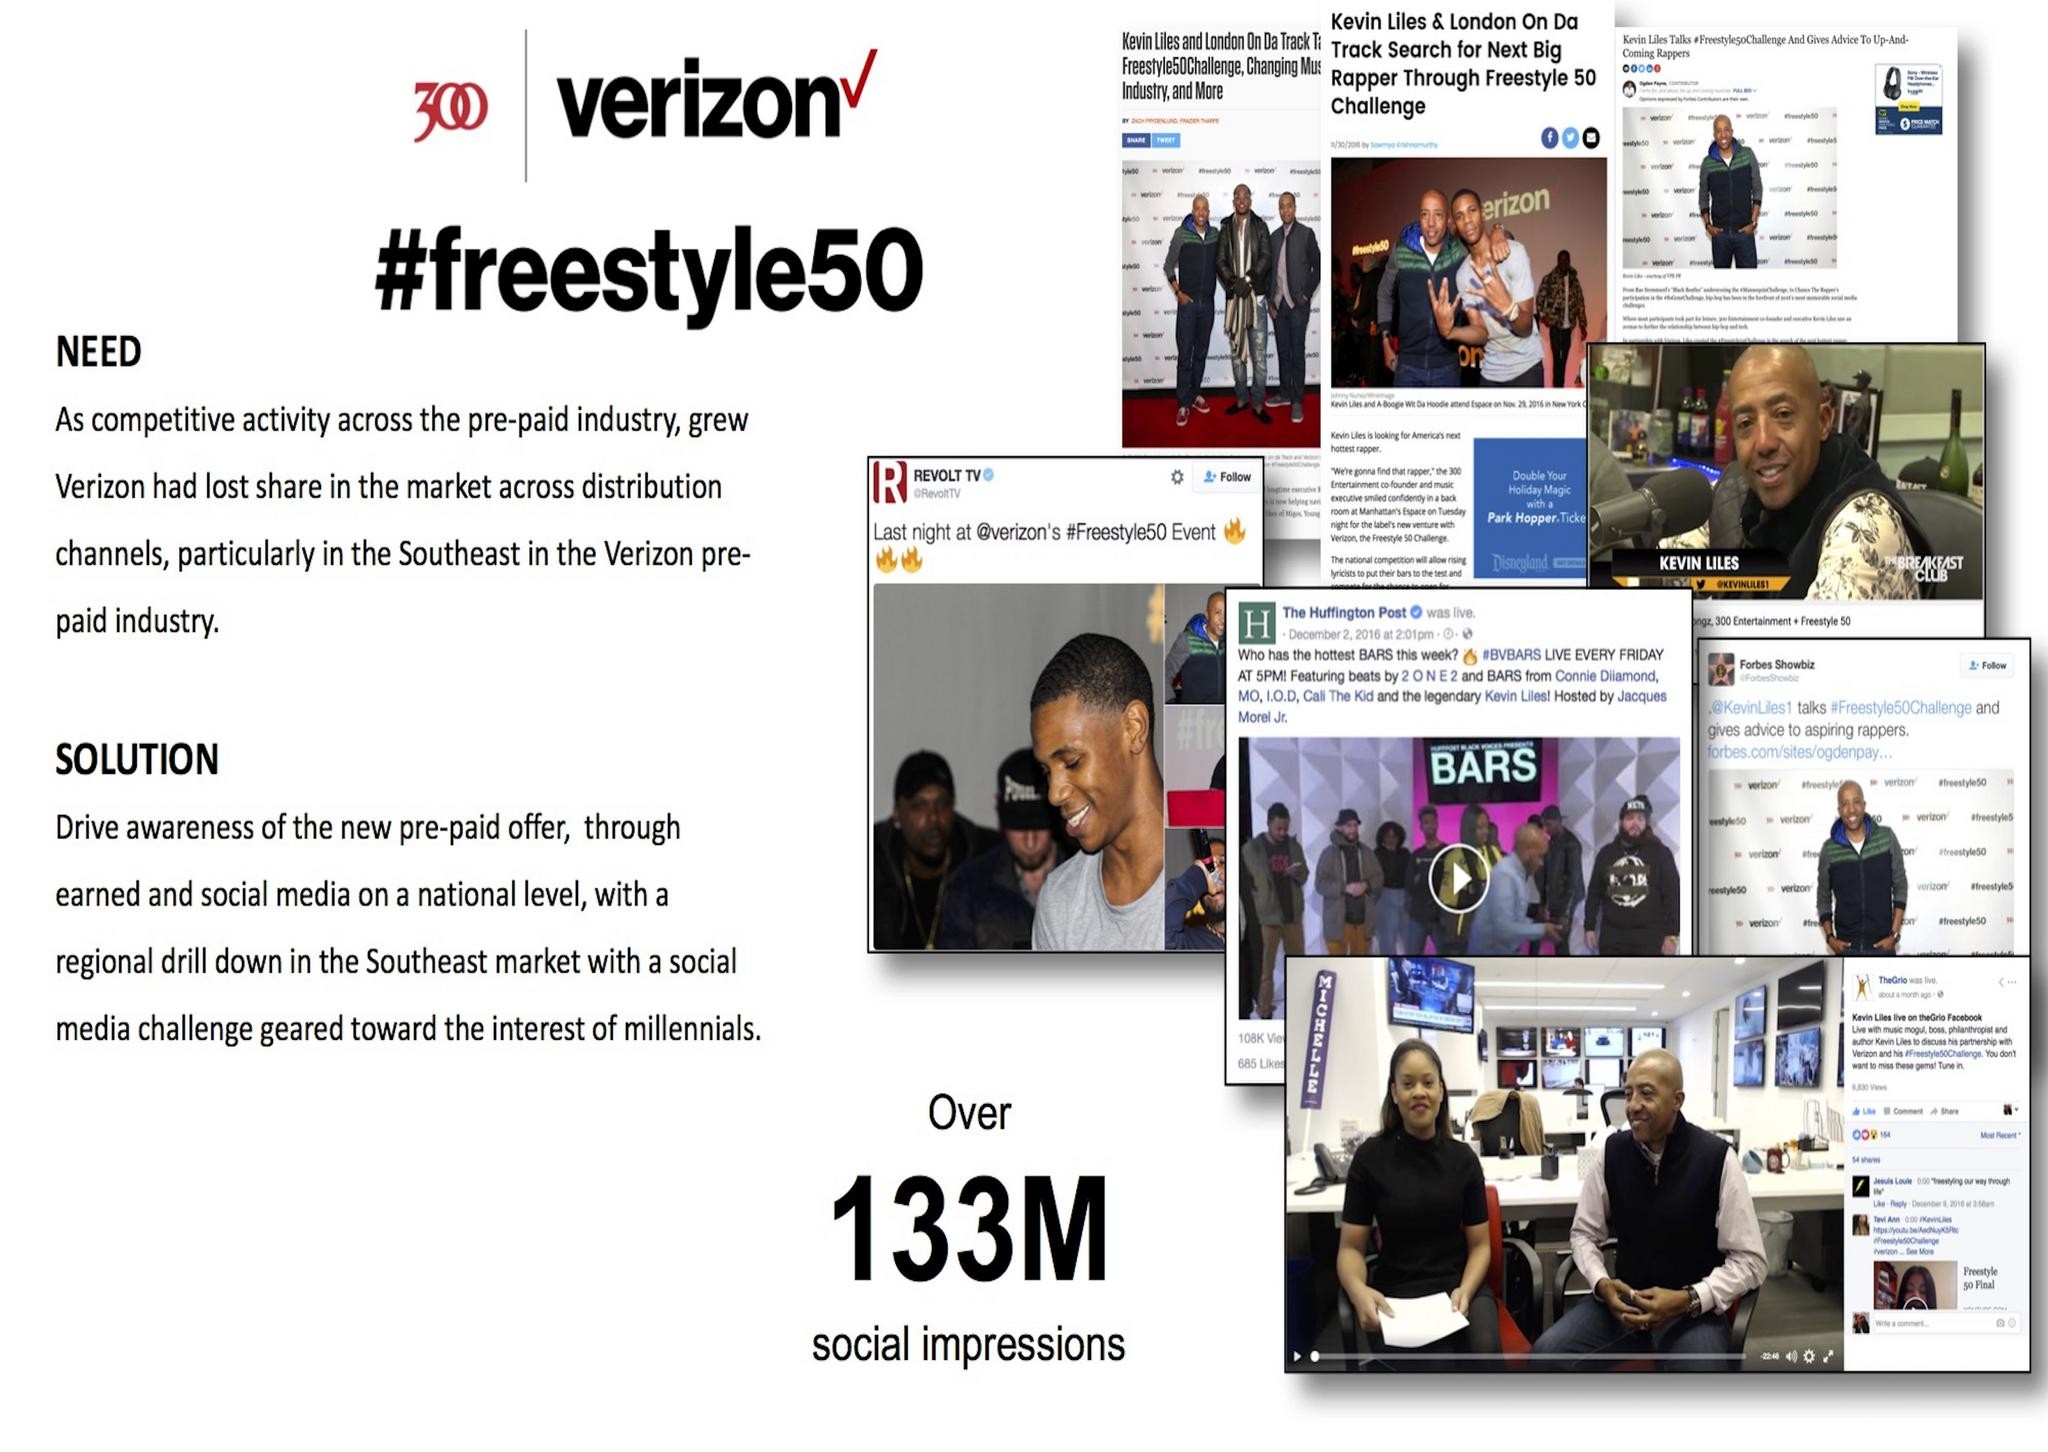 Verizon #freestyle50